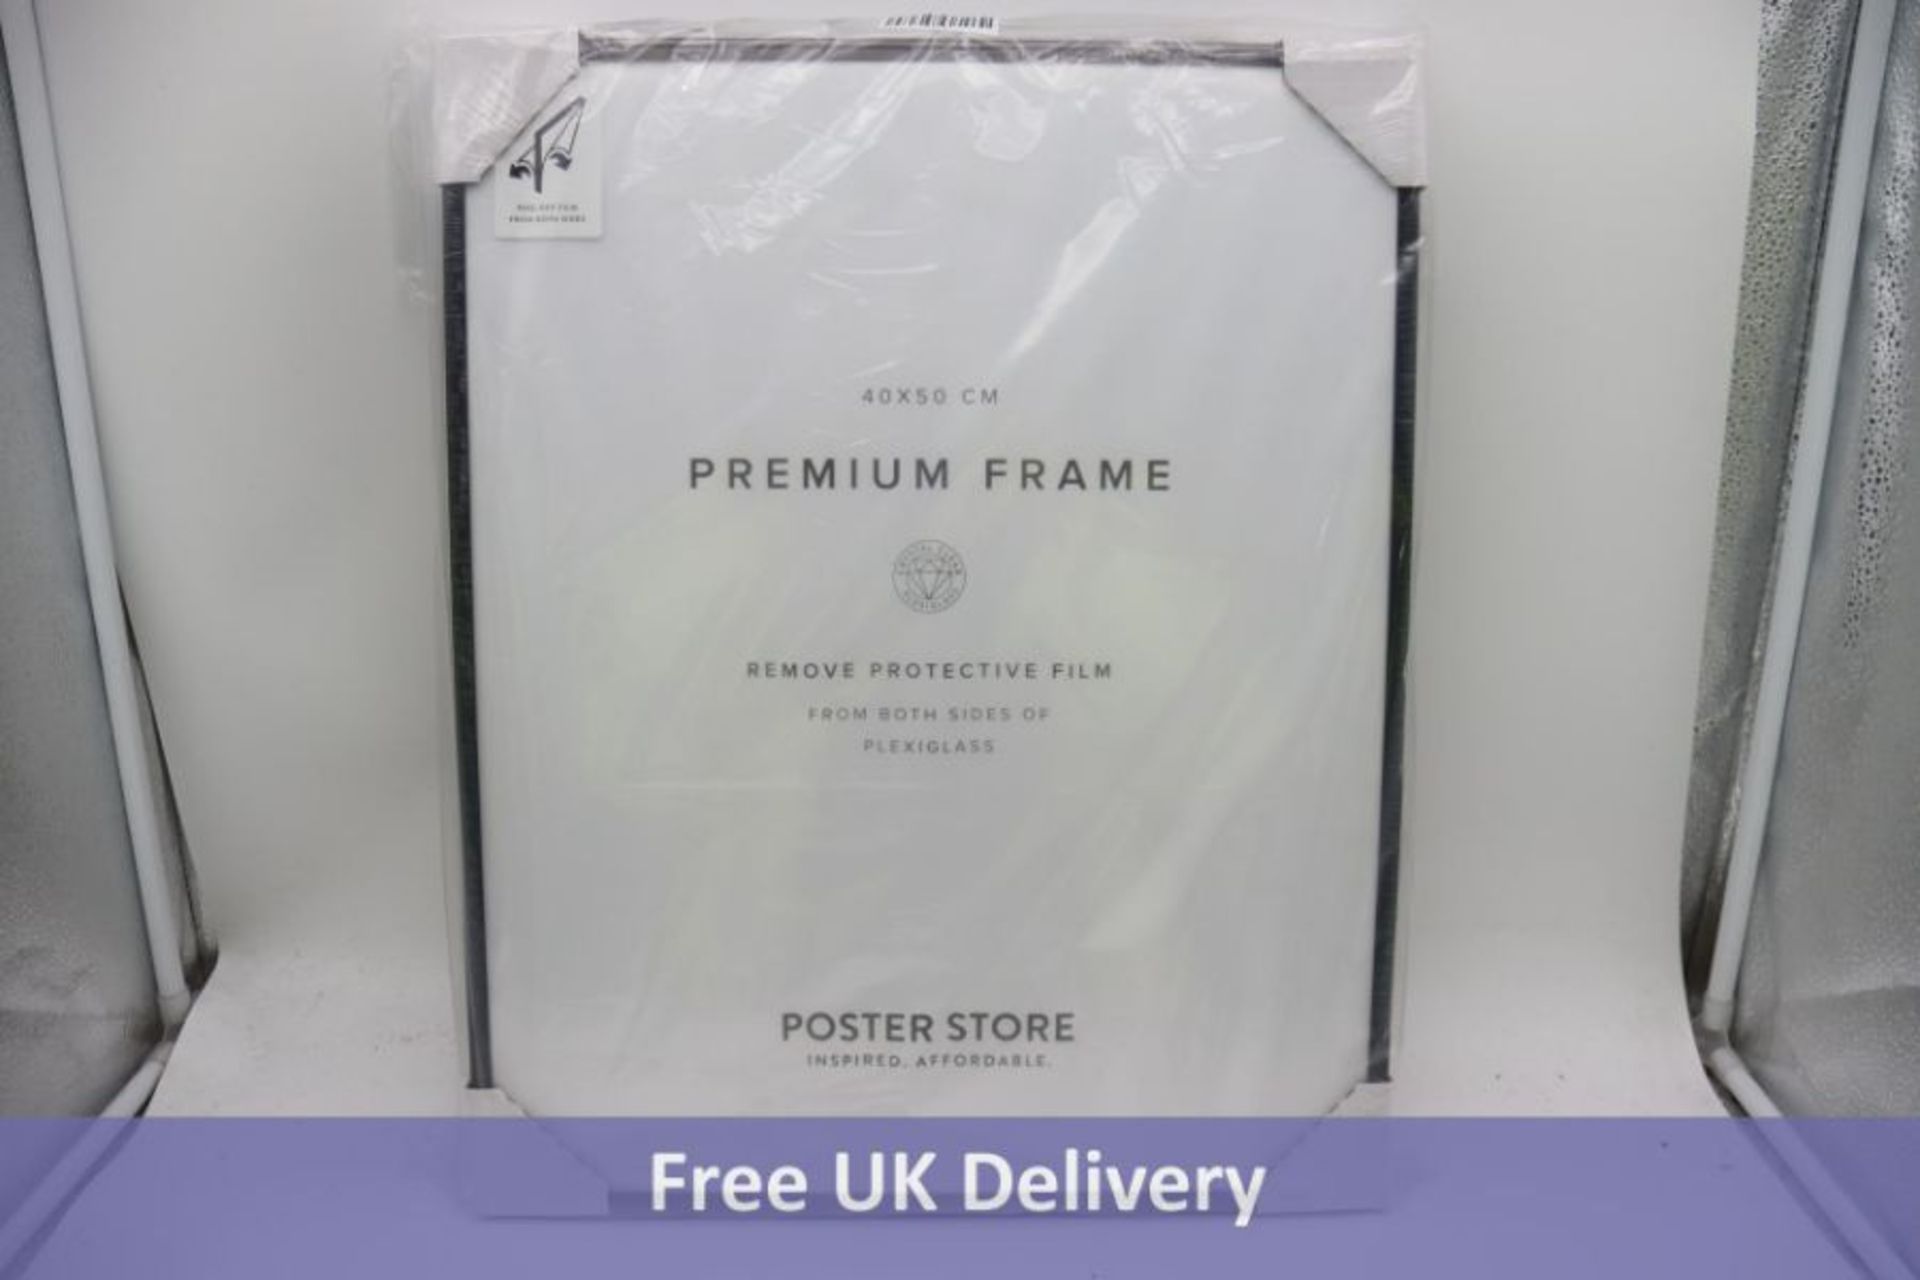 Three Poster Store Premium 40 x 50 CM Frames, Black